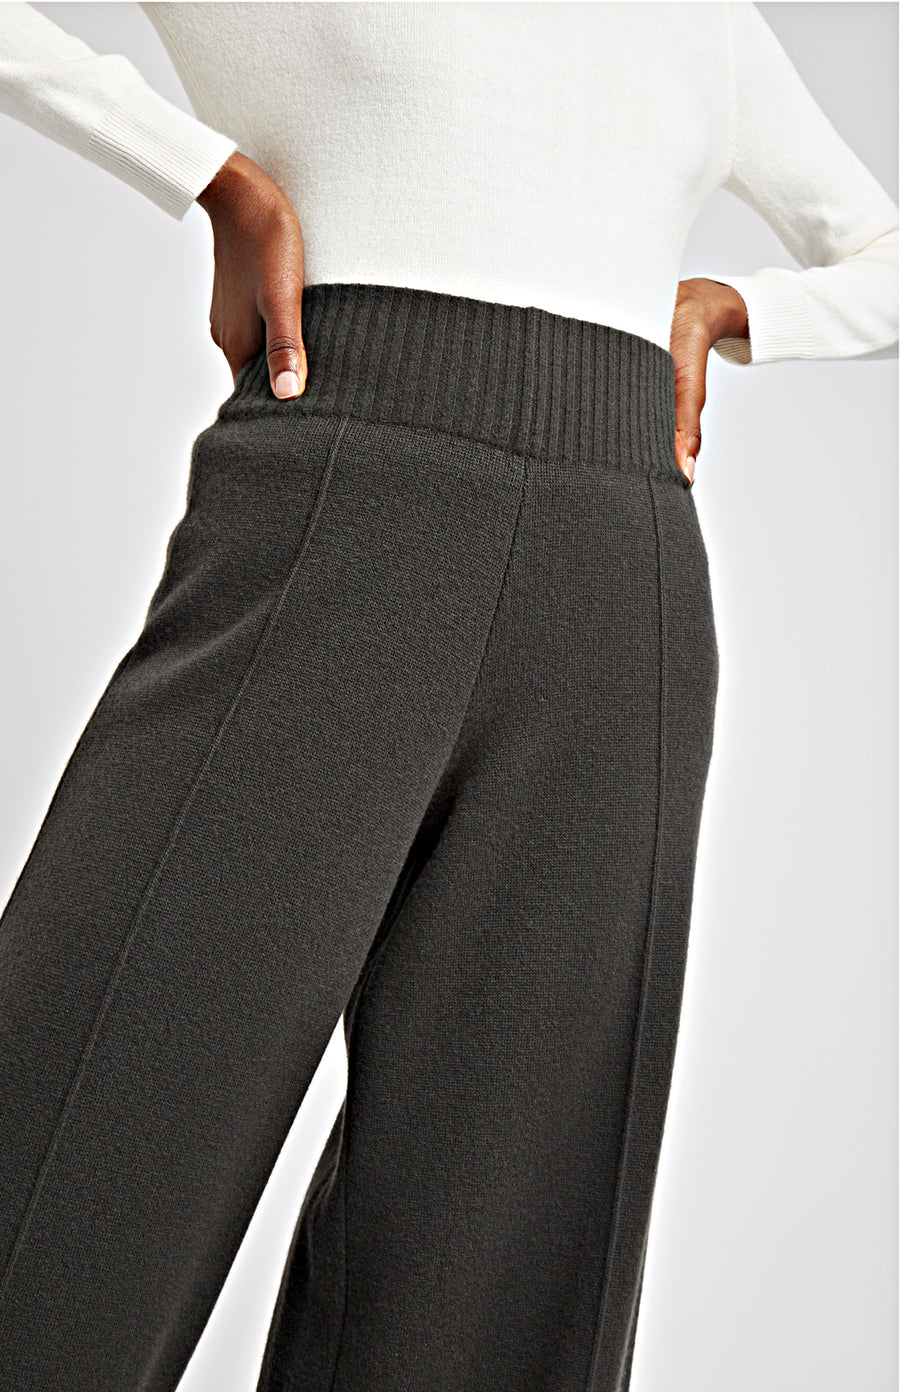 Women's Dark Khaki Cashmere Blend Trousers waist detail - Pringle of Scotland